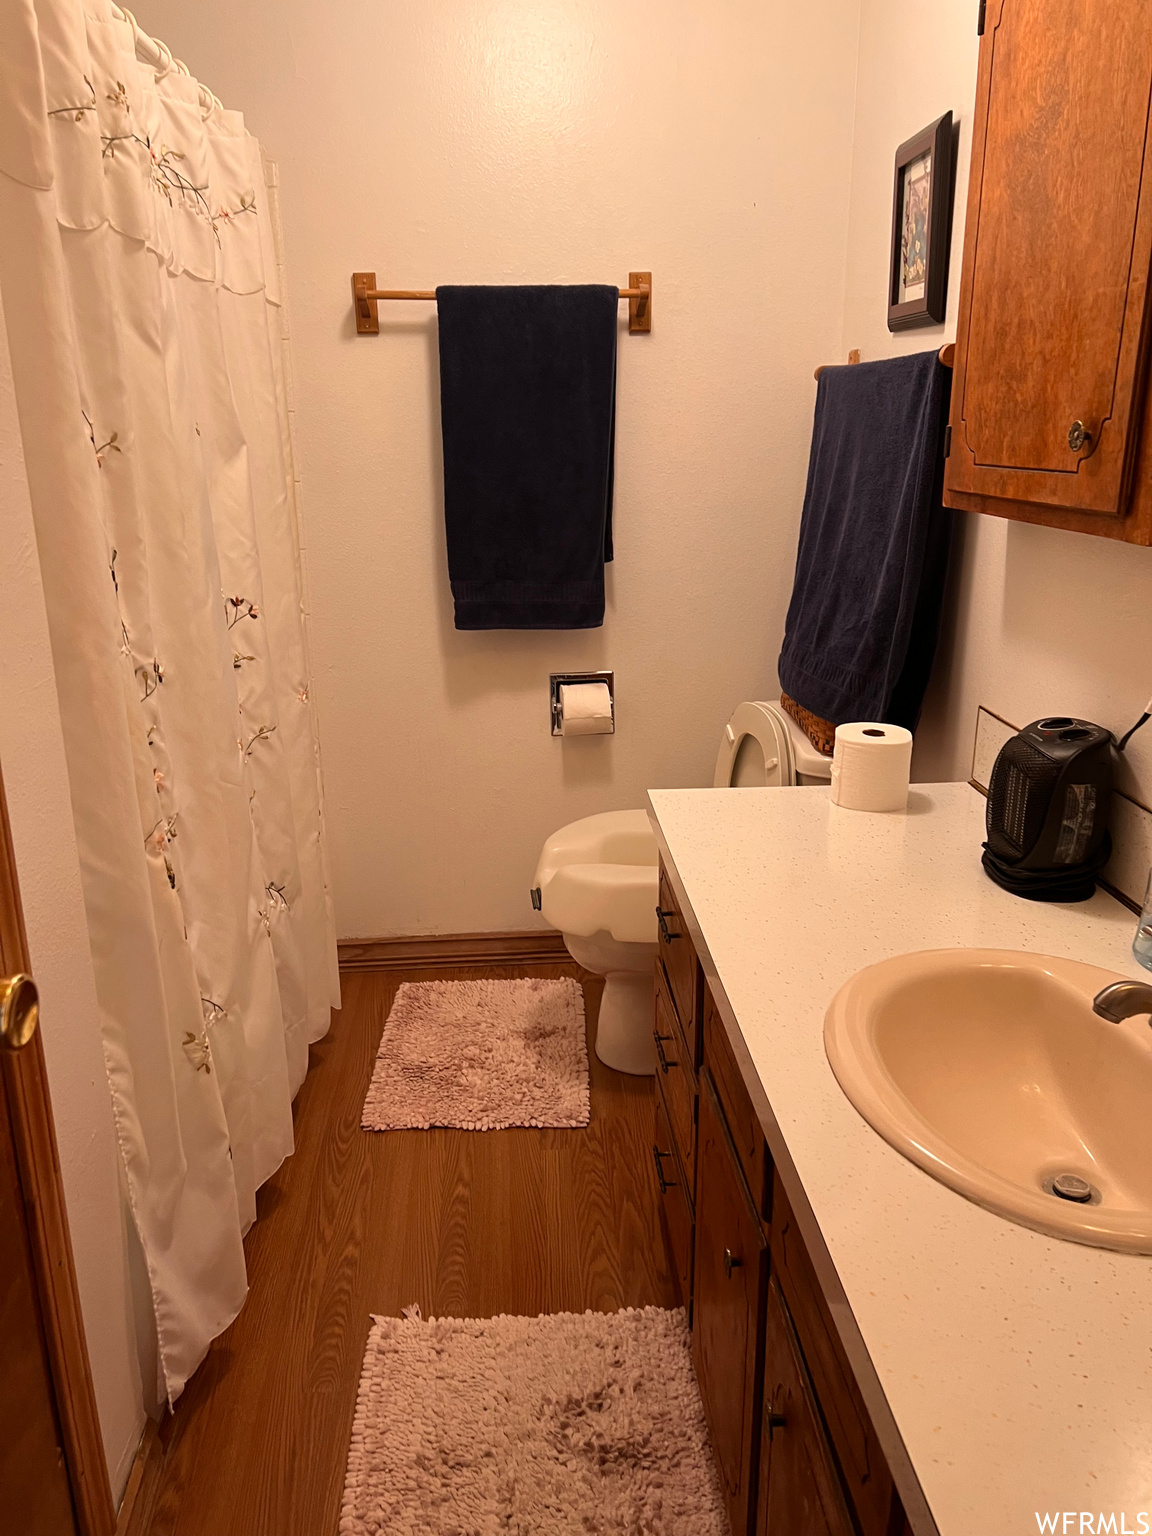 Bathroom featuring wood-type flooring, toilet, vanity, and shower curtain